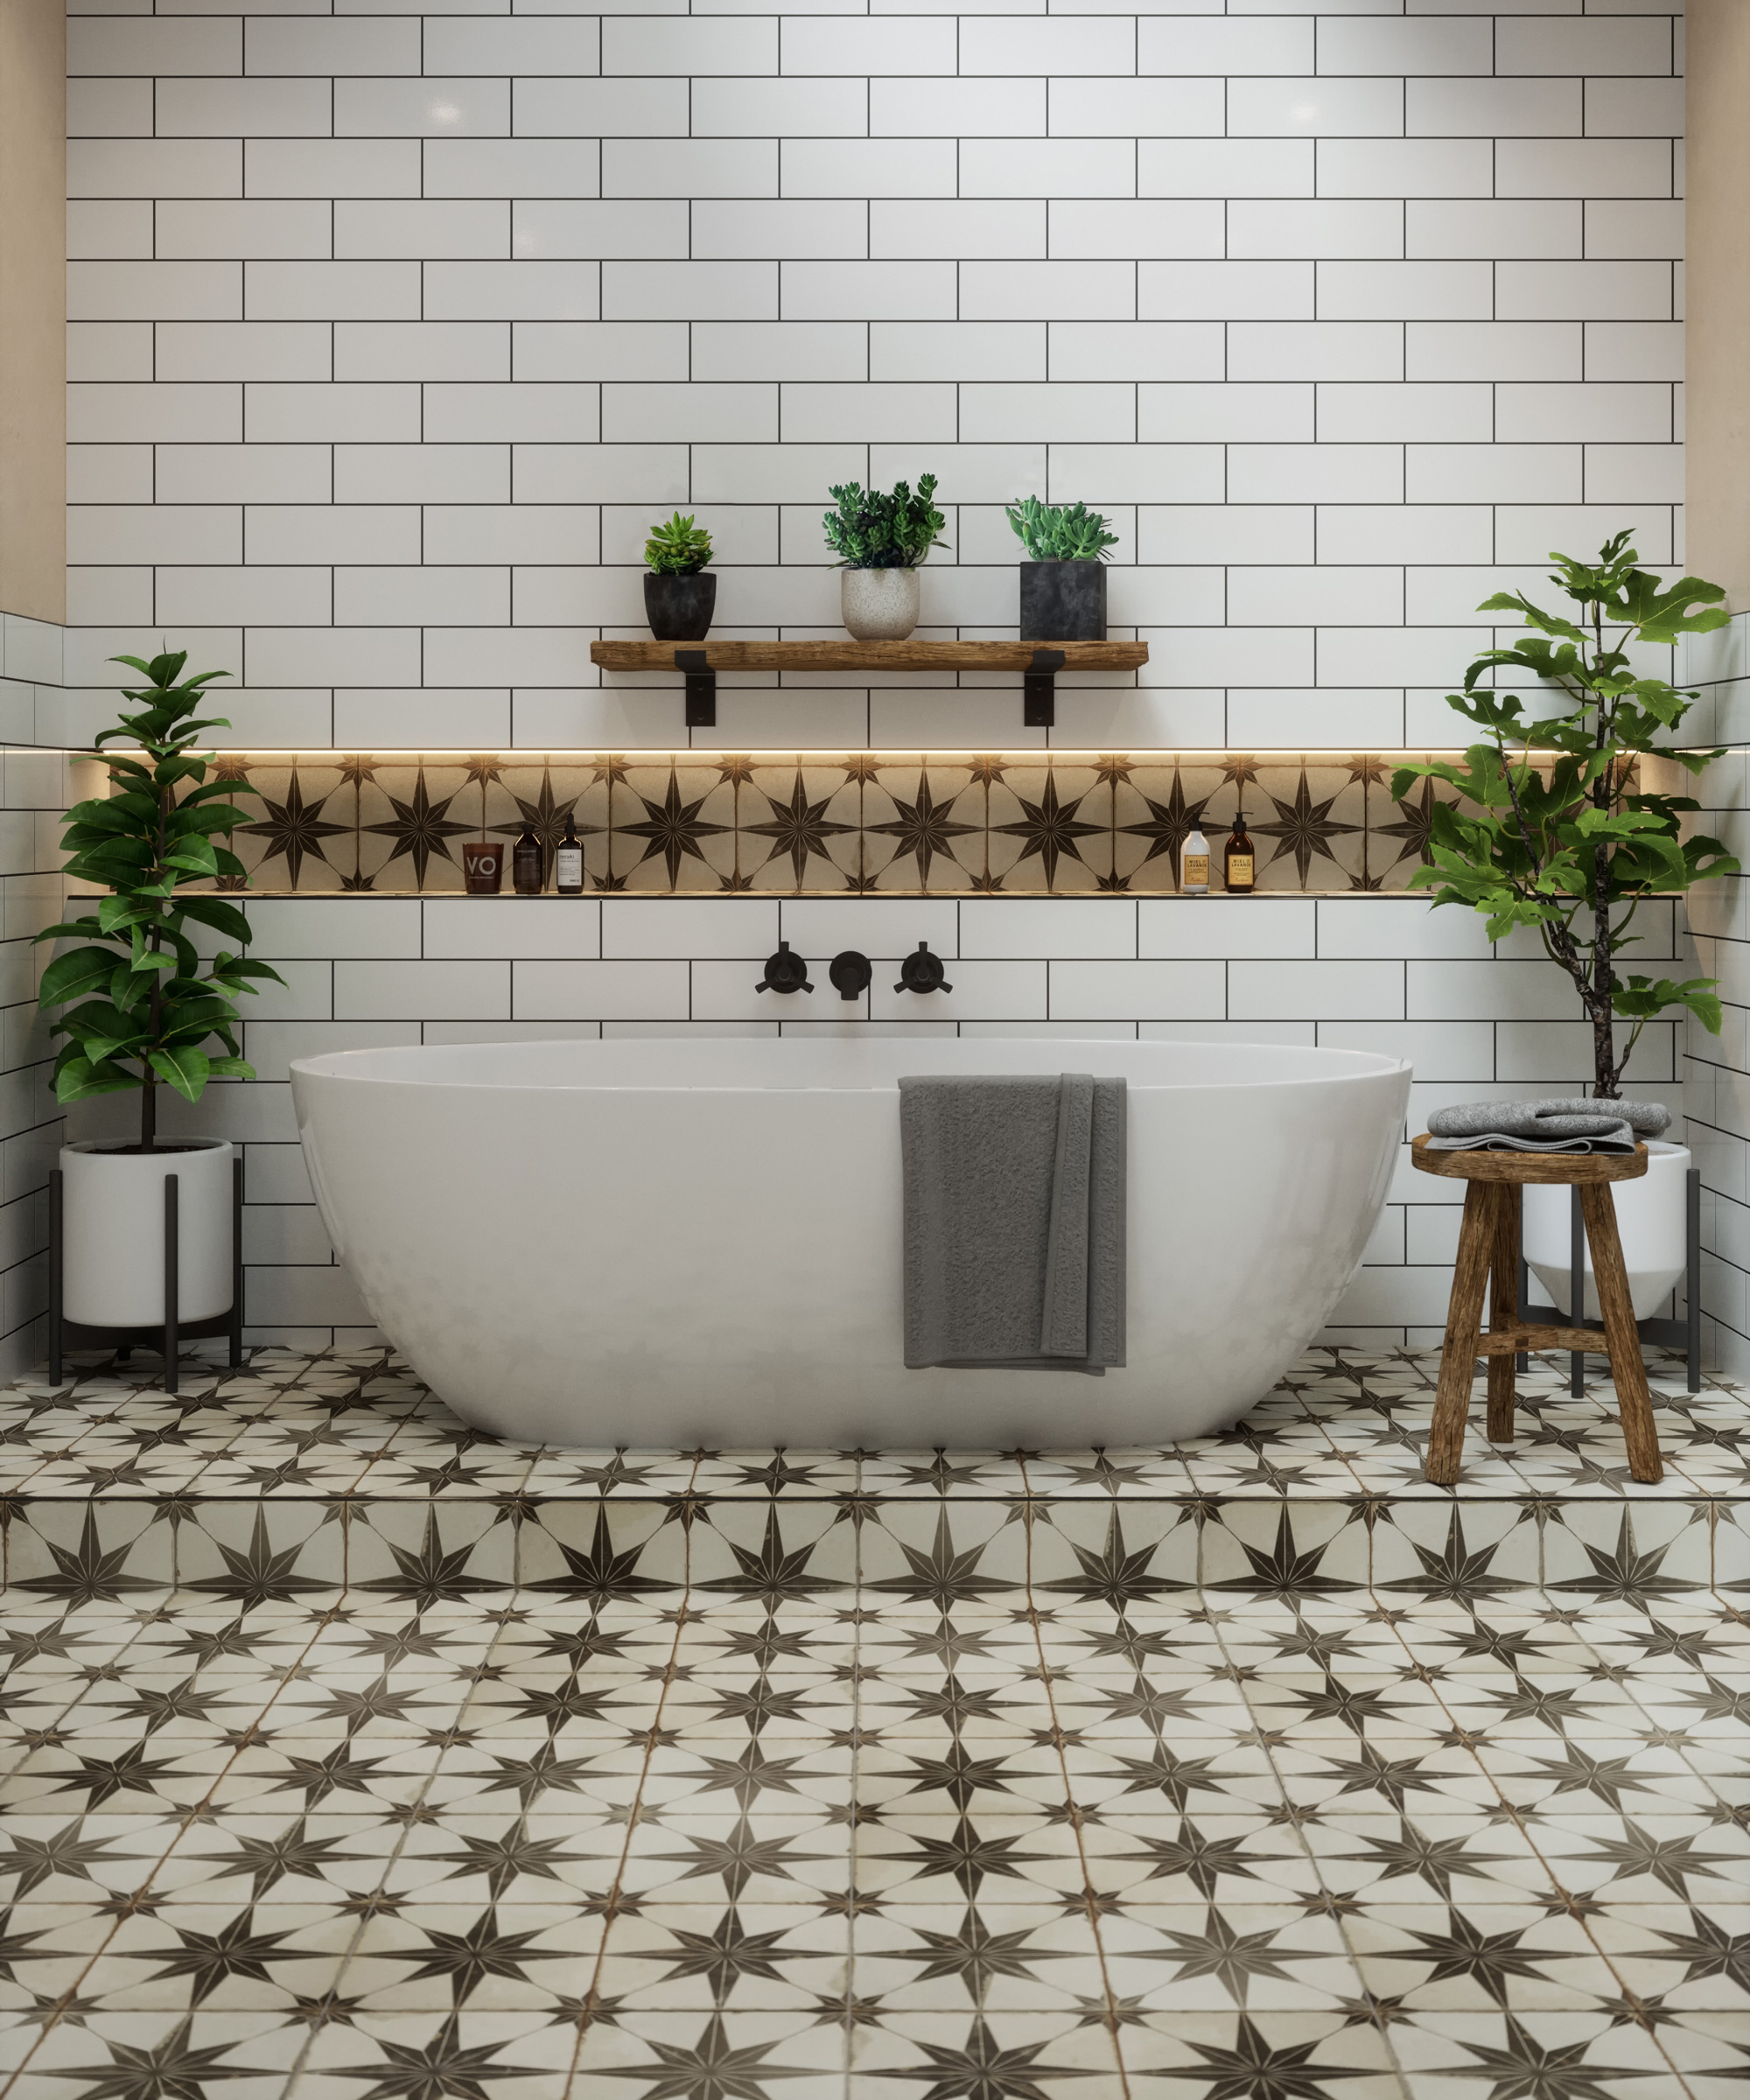 Bathroom Tile Ideas 32 New Looks To, How To Install A Herringbone Tile Shower Floor